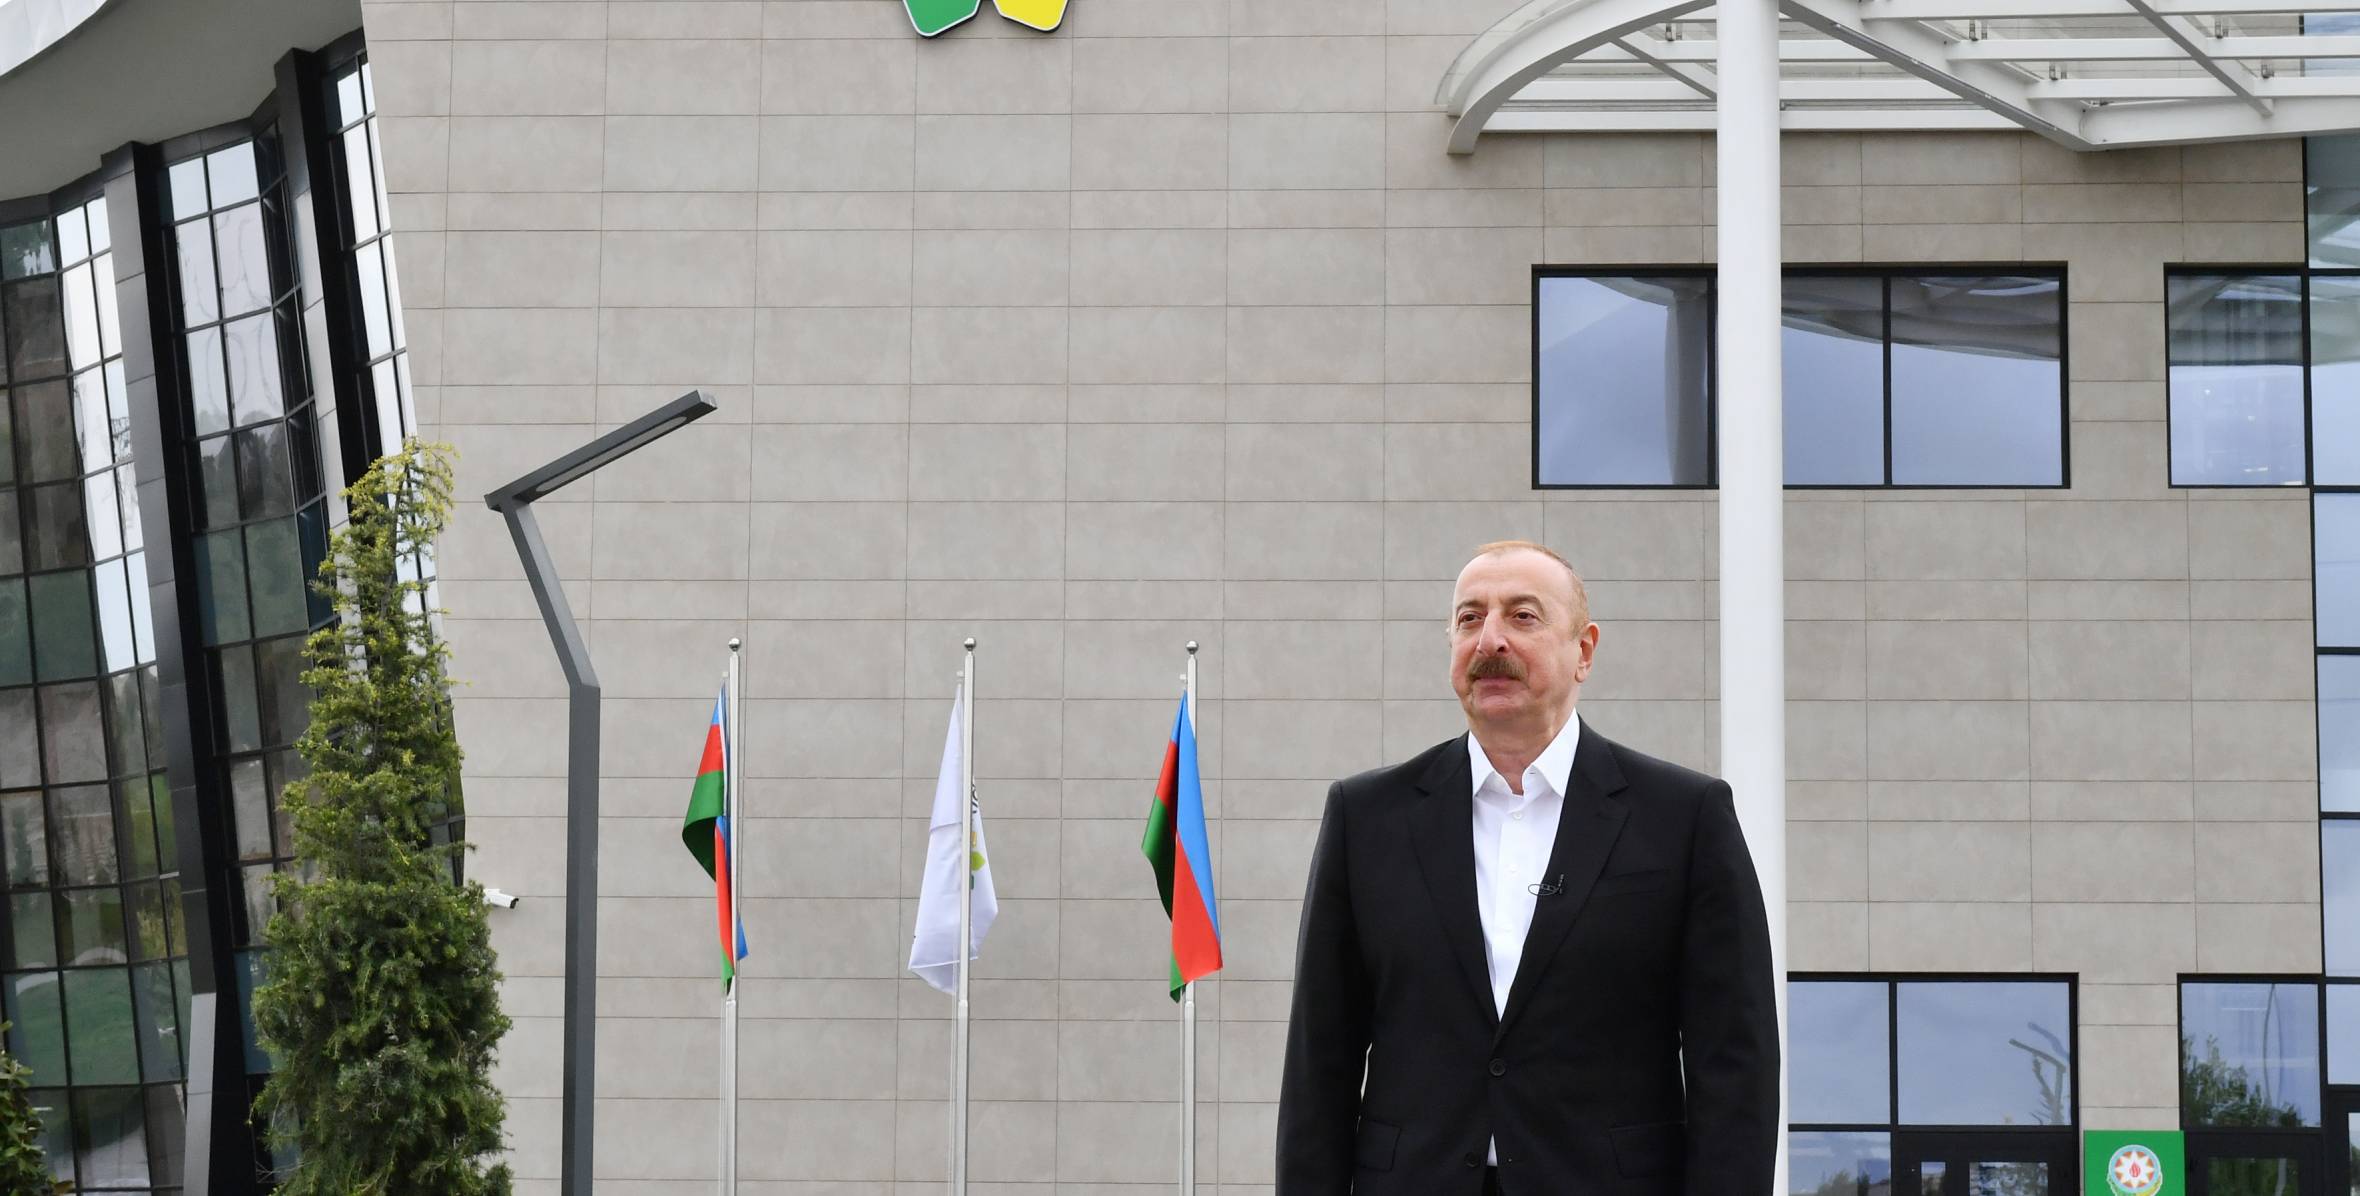 Ilham Aliyev was interviewed by Azerbaijan Television in city of Salyan